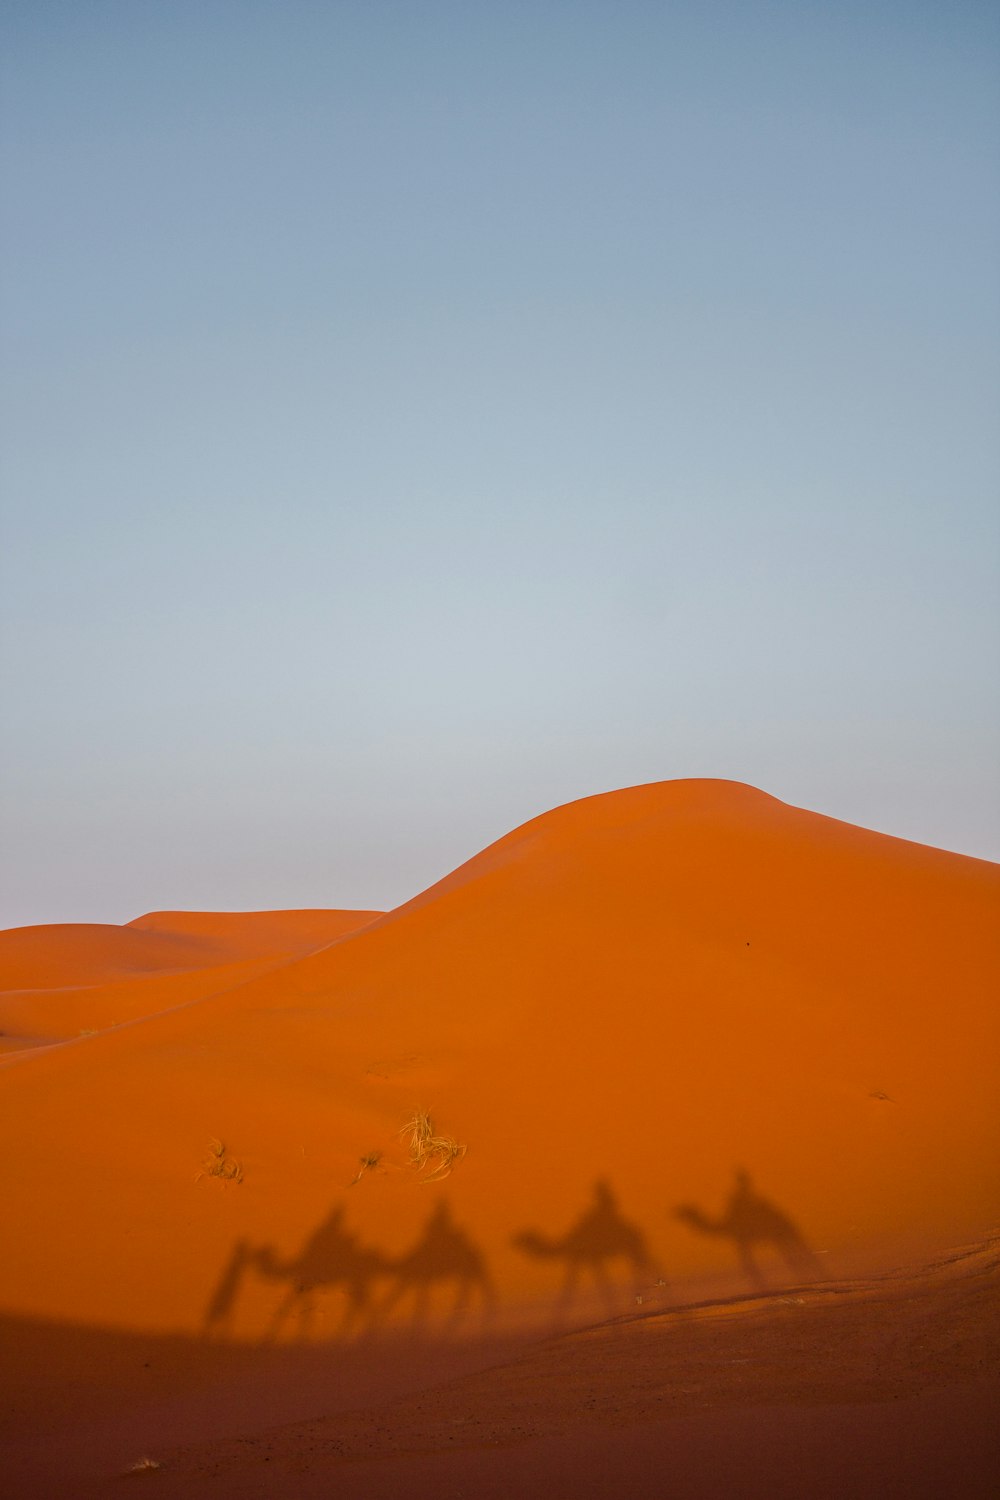 shadow of camel in desert under blue sky